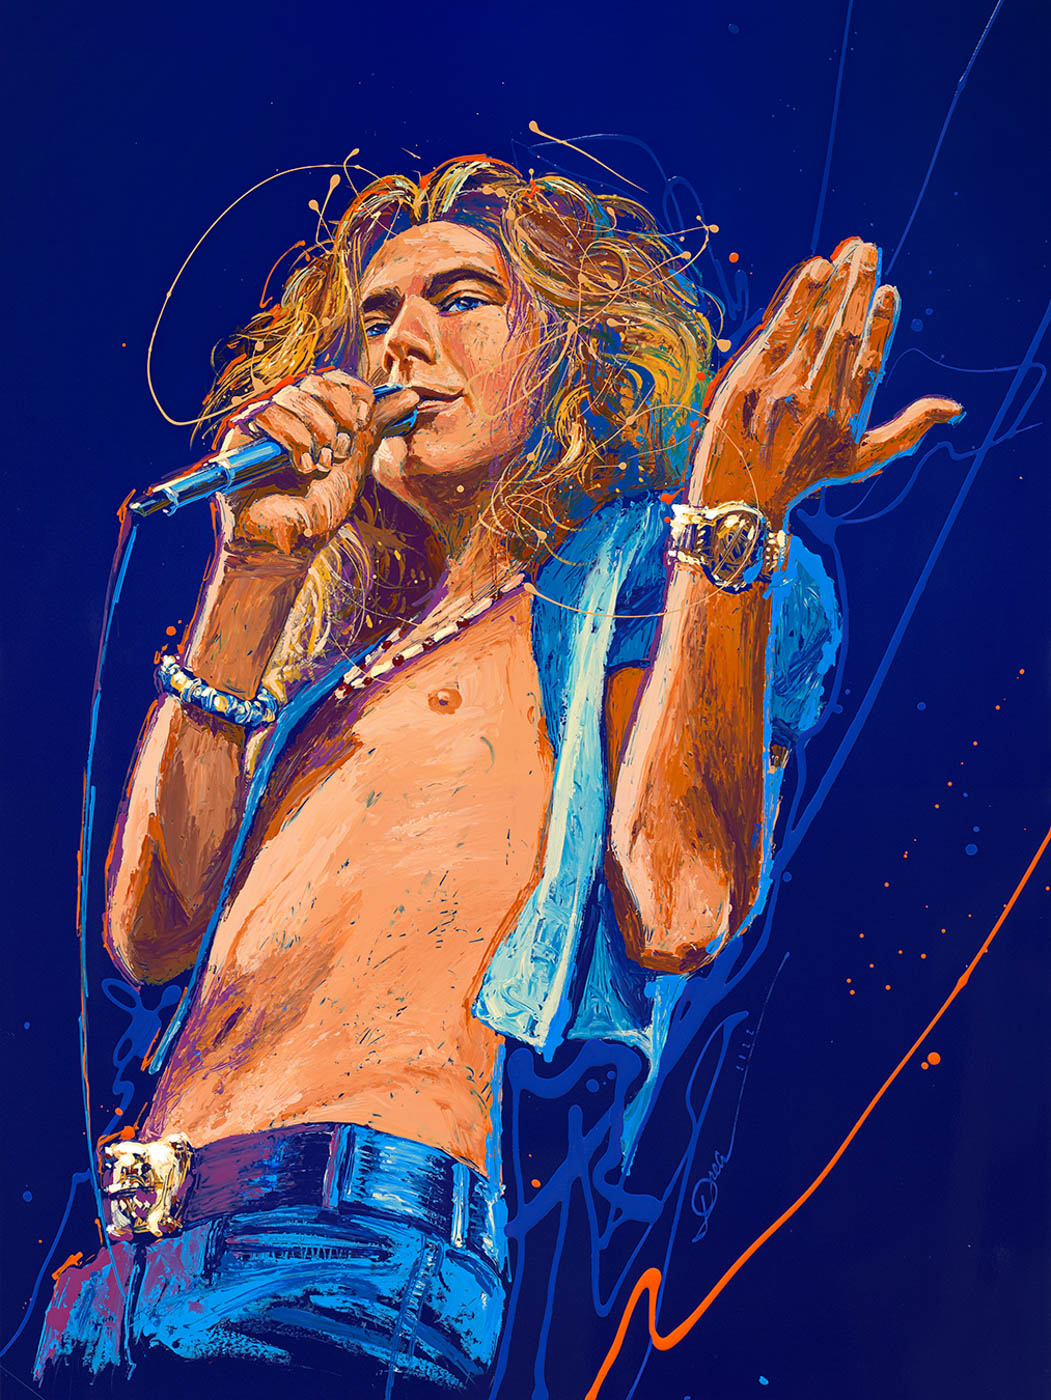 Whole Lotta Love – Robert Plant